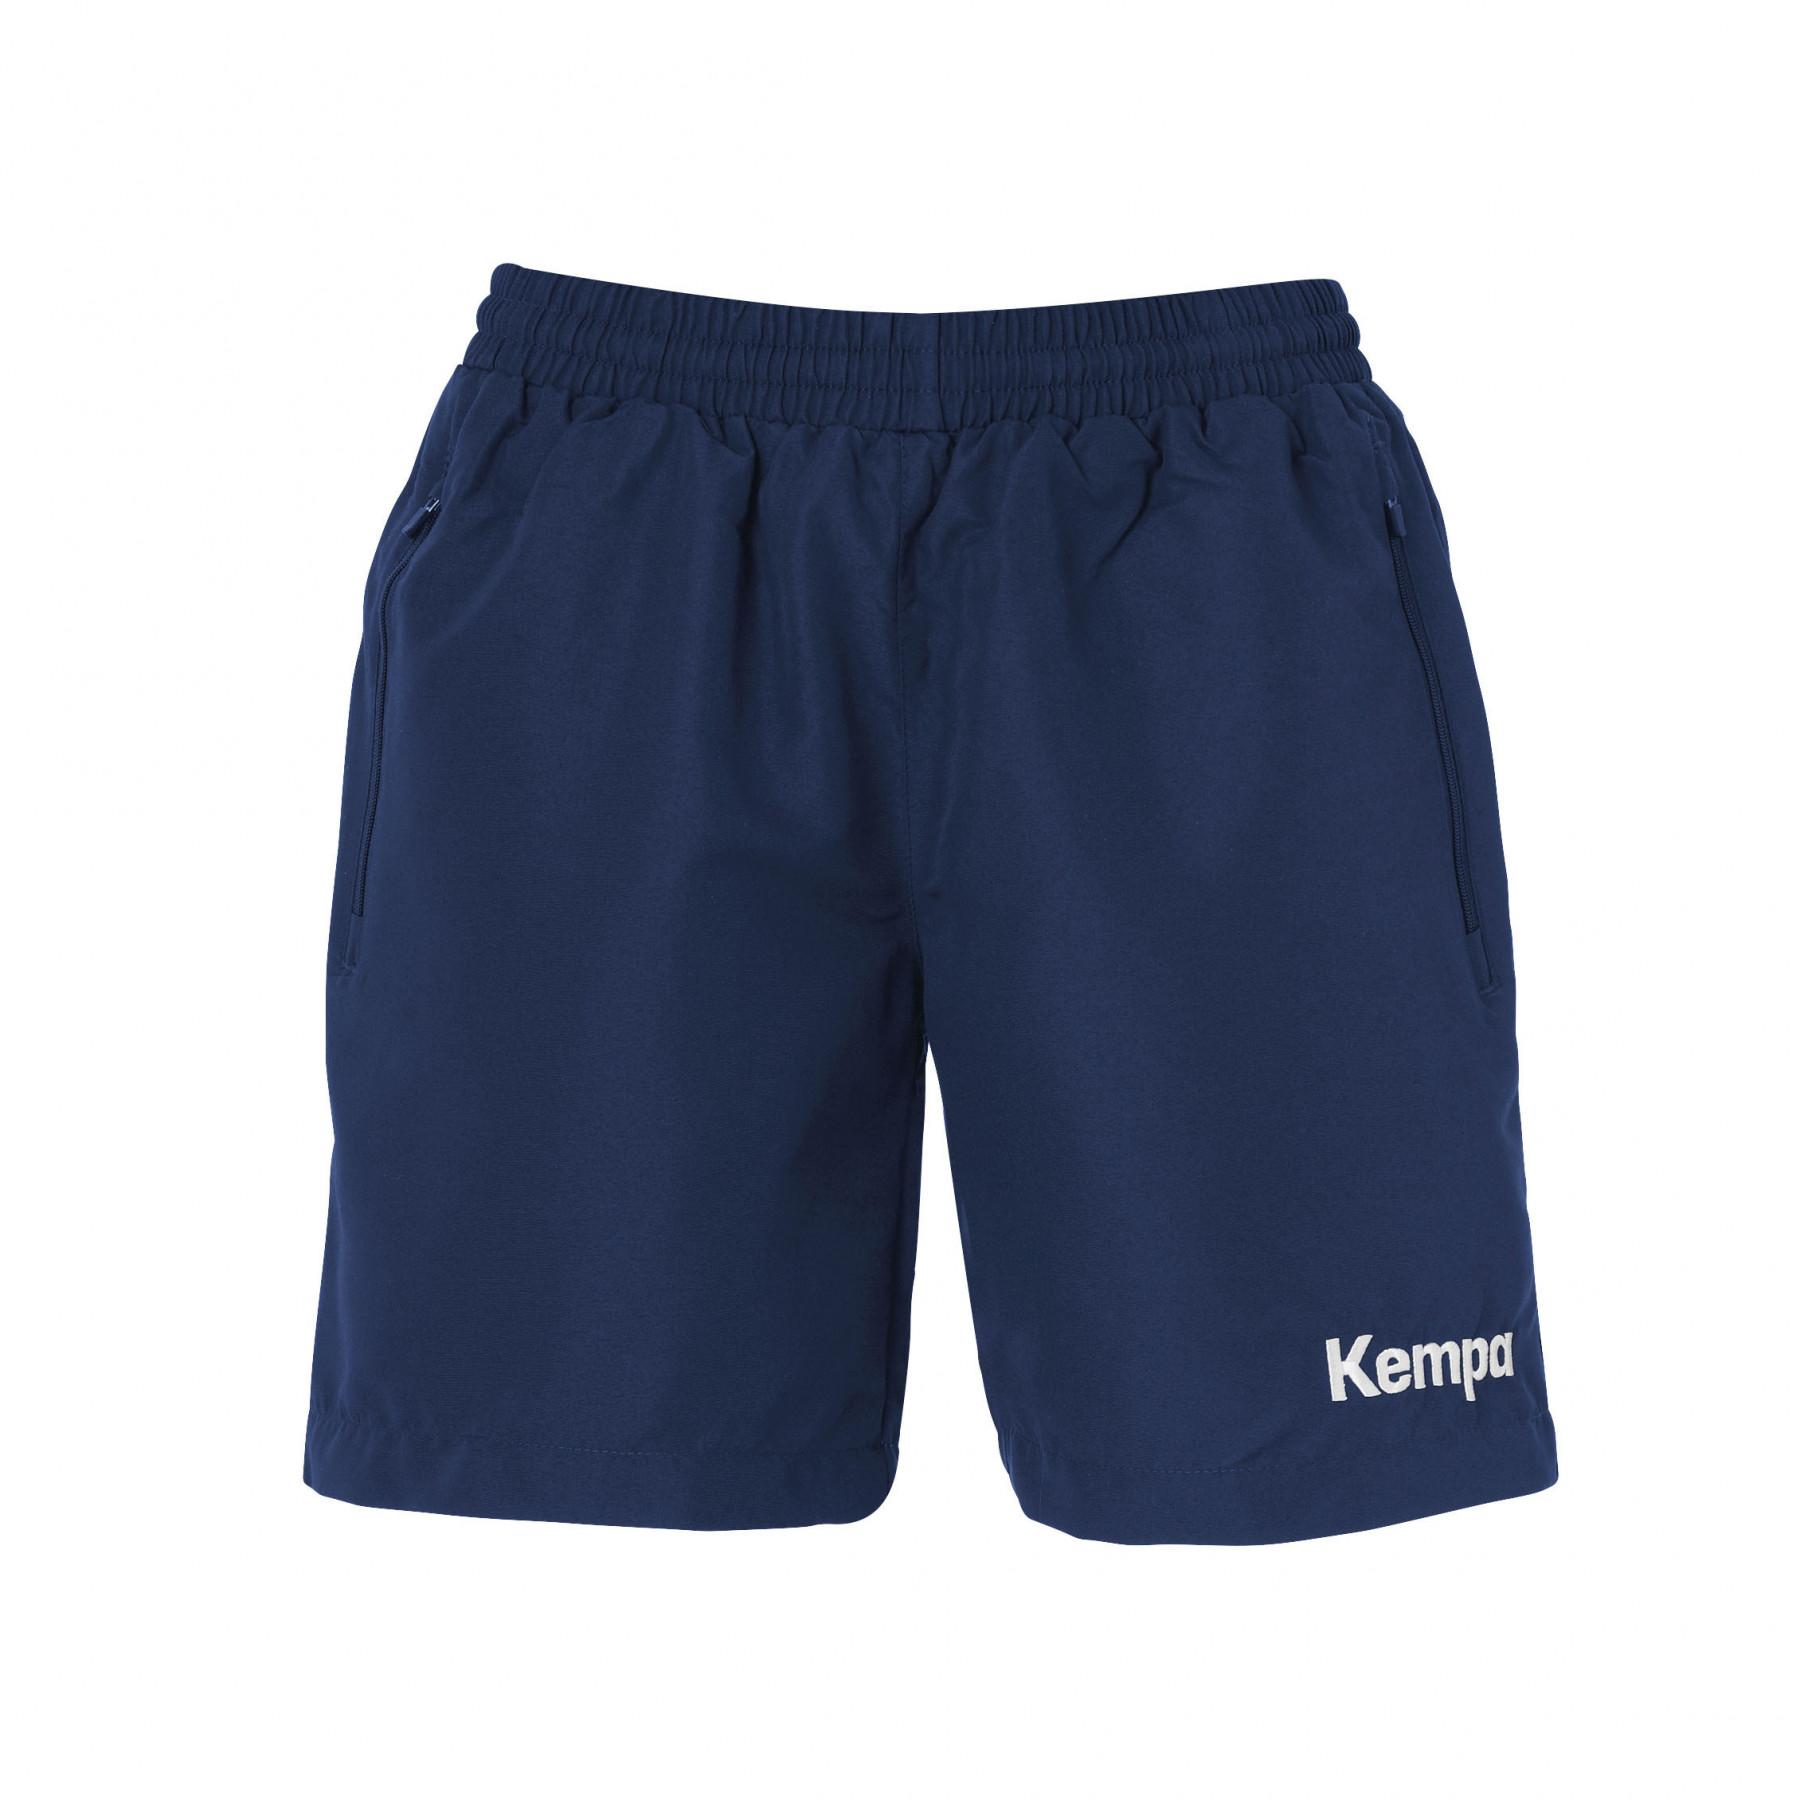 Short Kempa Woven bleu marine